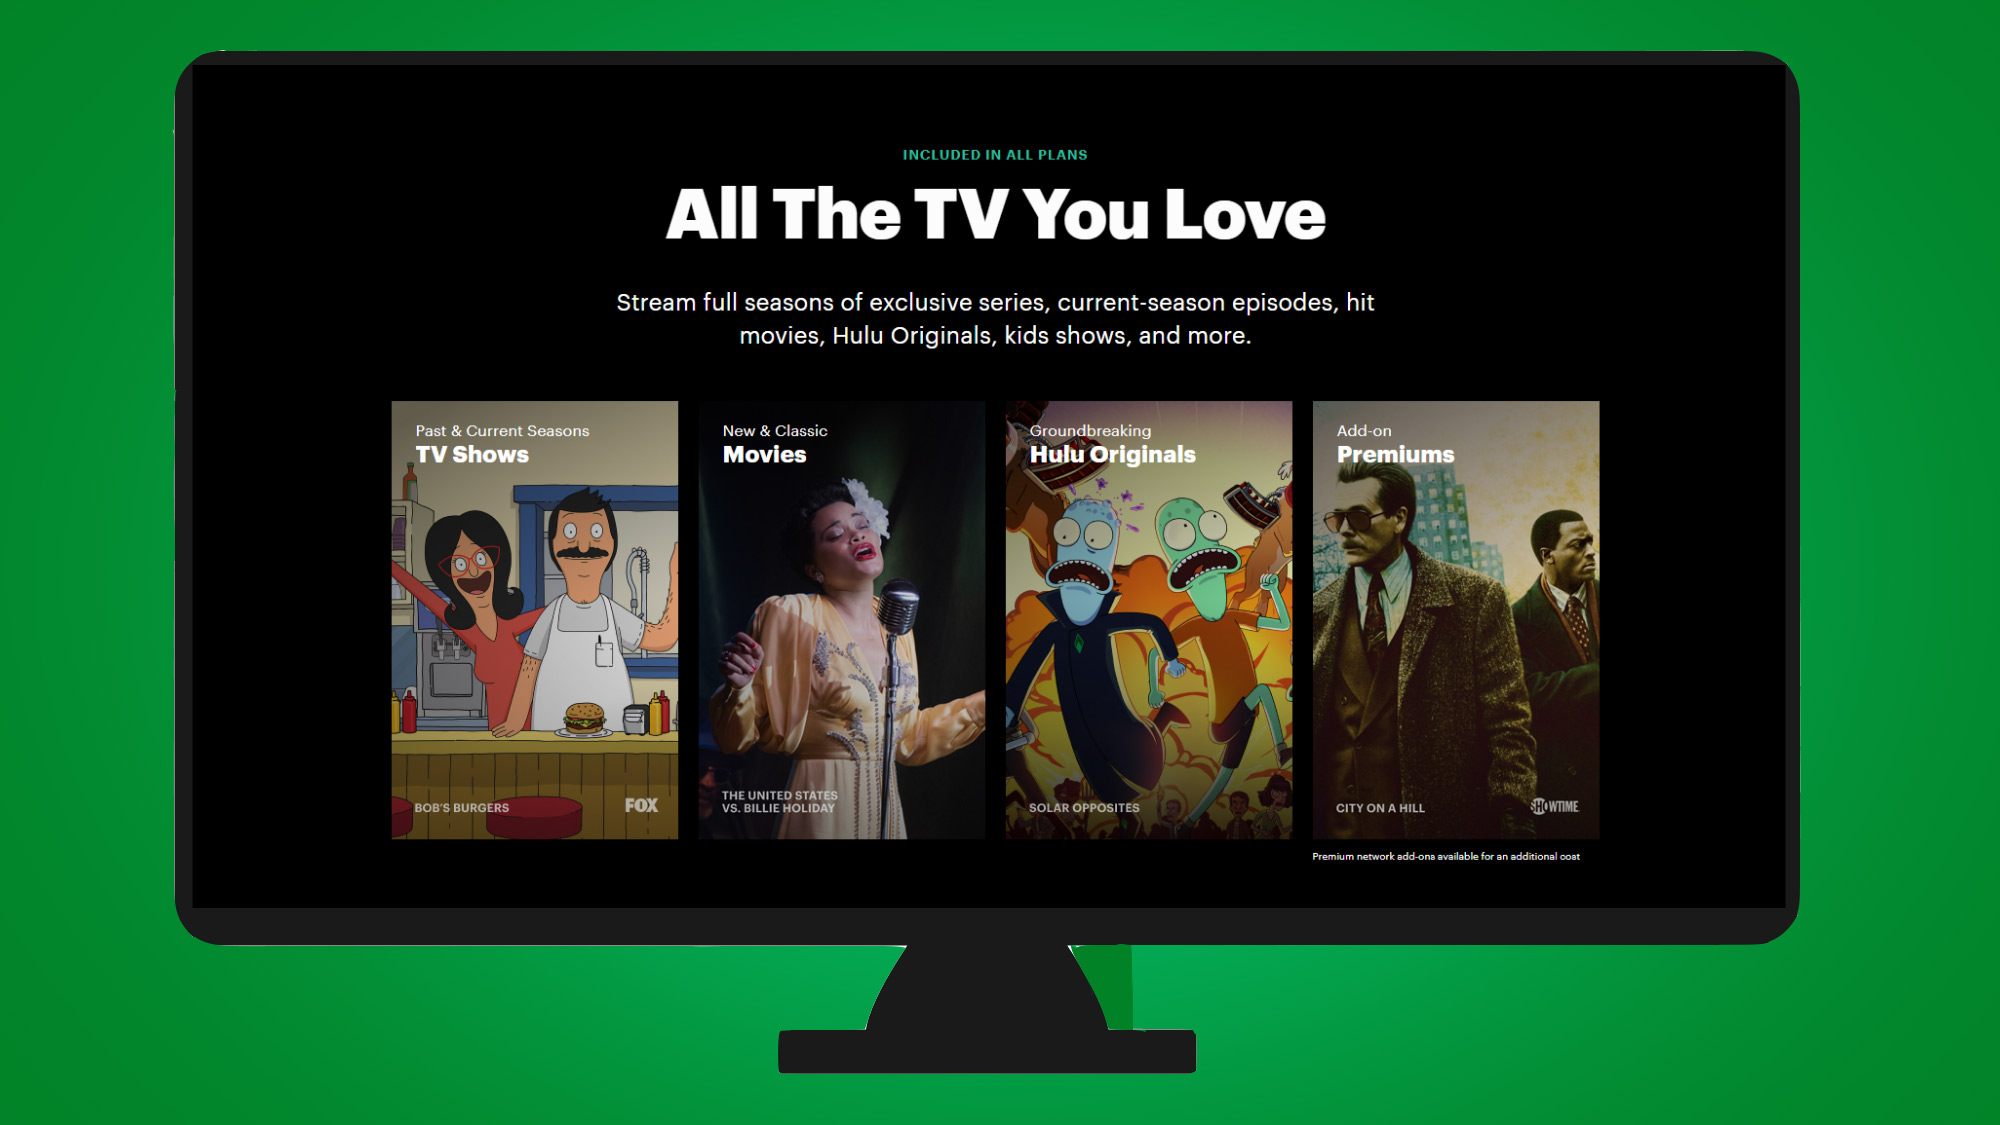 A bunch of Hulu TV show stills shown on a TV